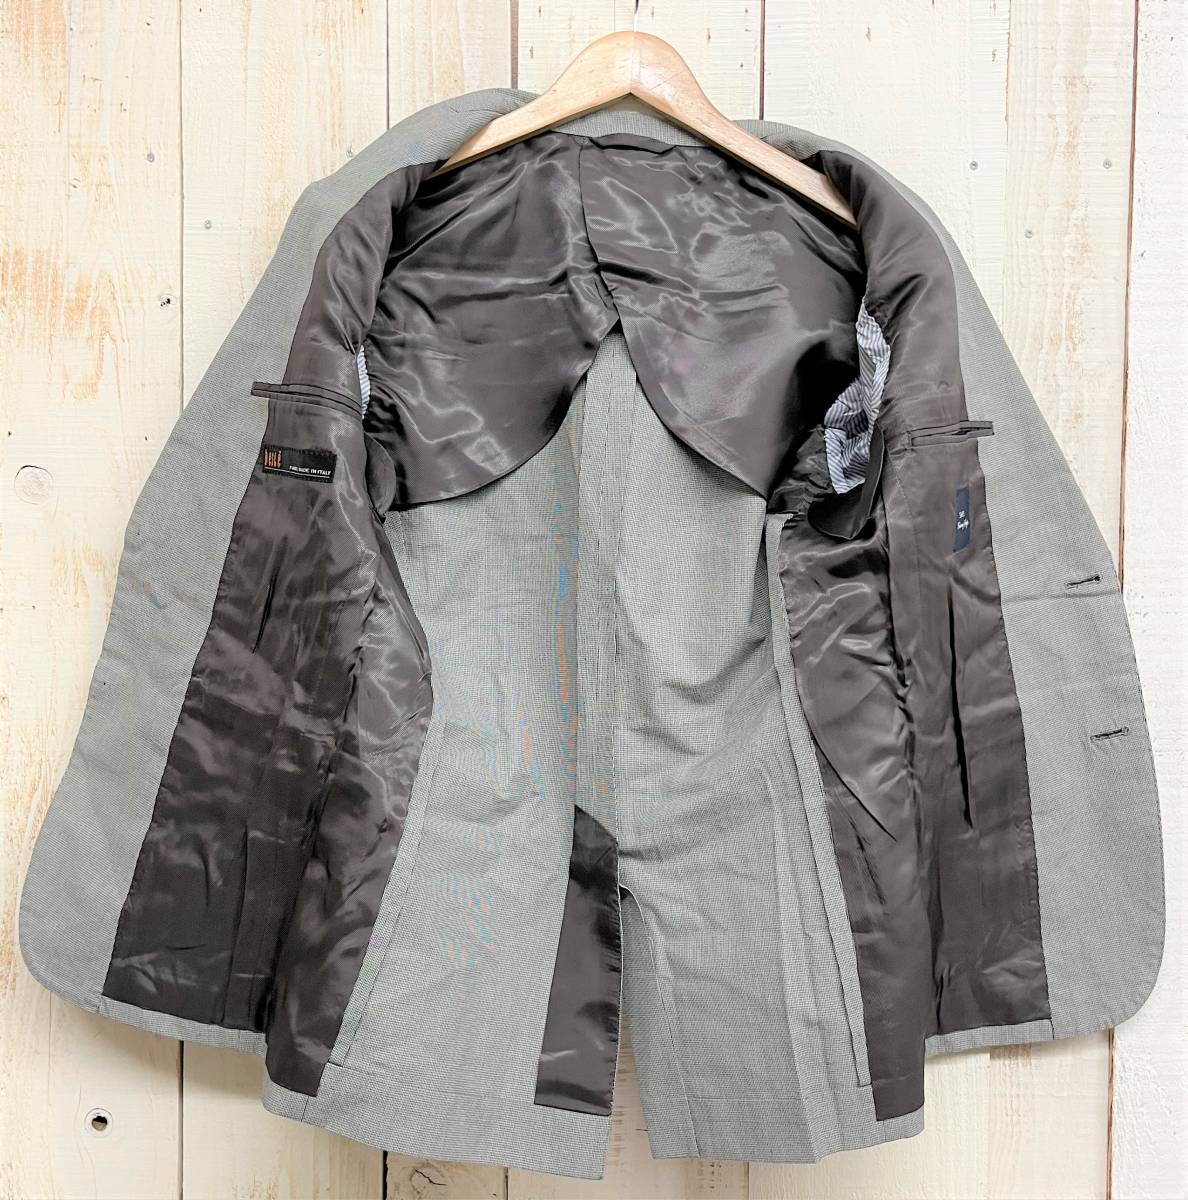 SHIPS Ships * thousand bird ..linen flax .* tailored jacket *44 size * gray series single center vent .. made in Japan gentleman men's 